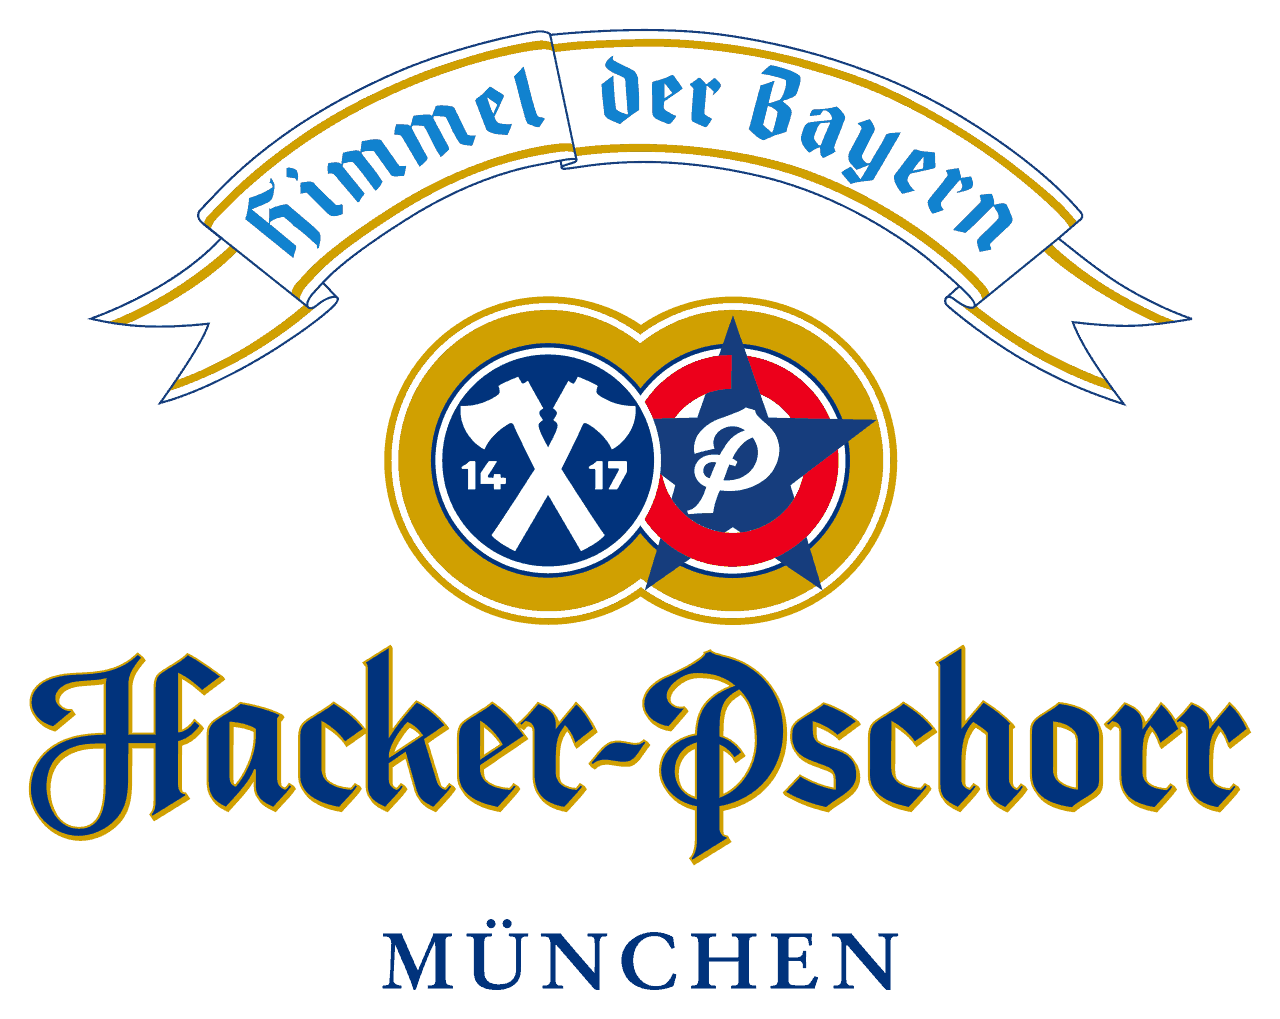 Hacker Pschorr logo.svg